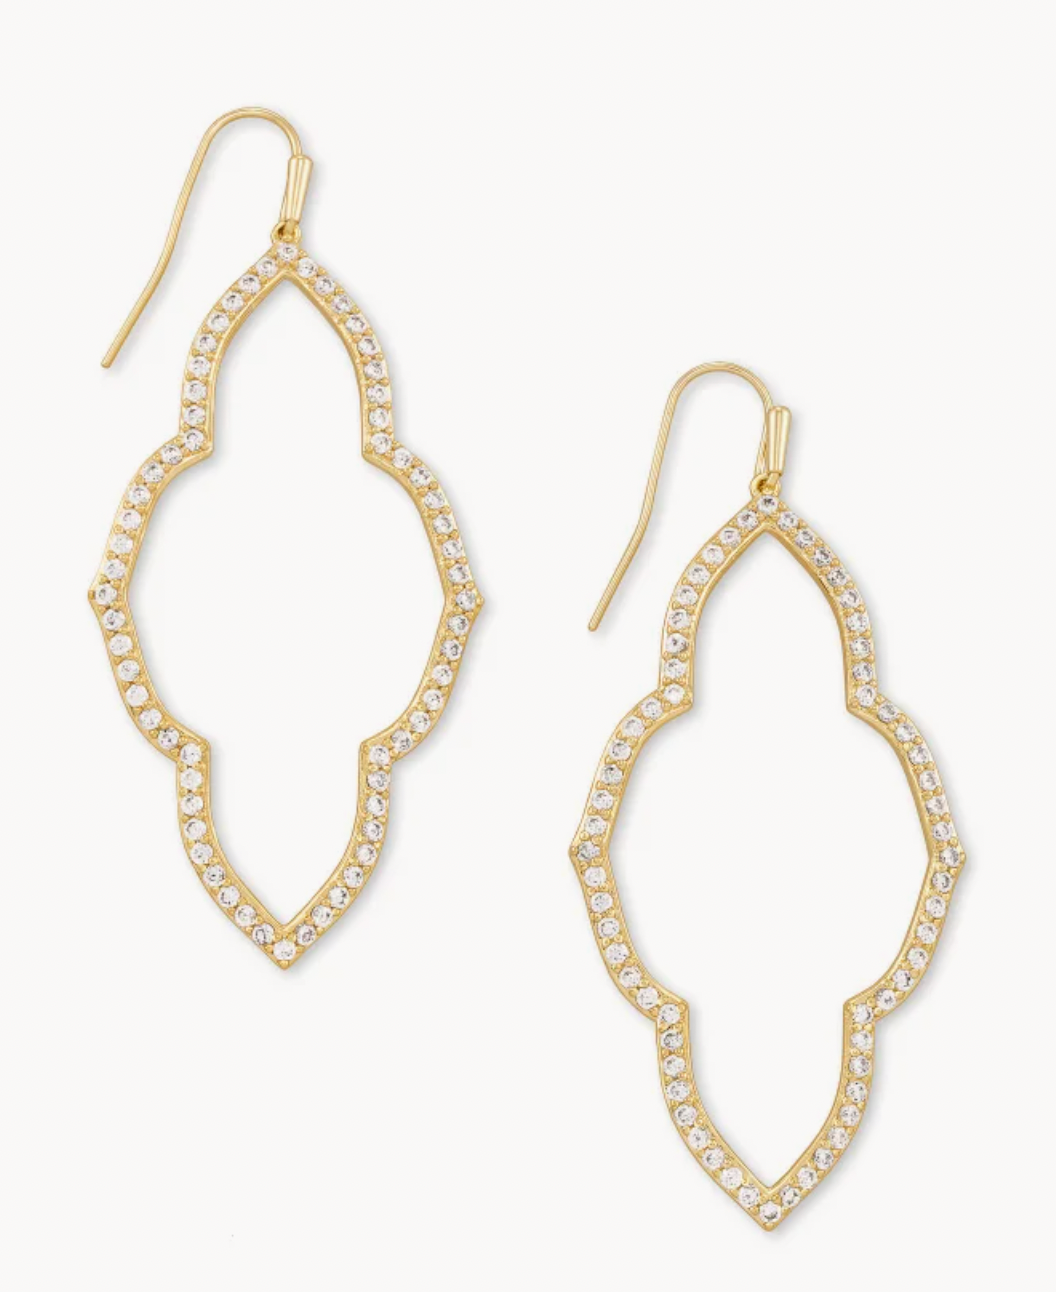 Kendra Scott Abbie Gold Open Frame Earrings in White Crystal